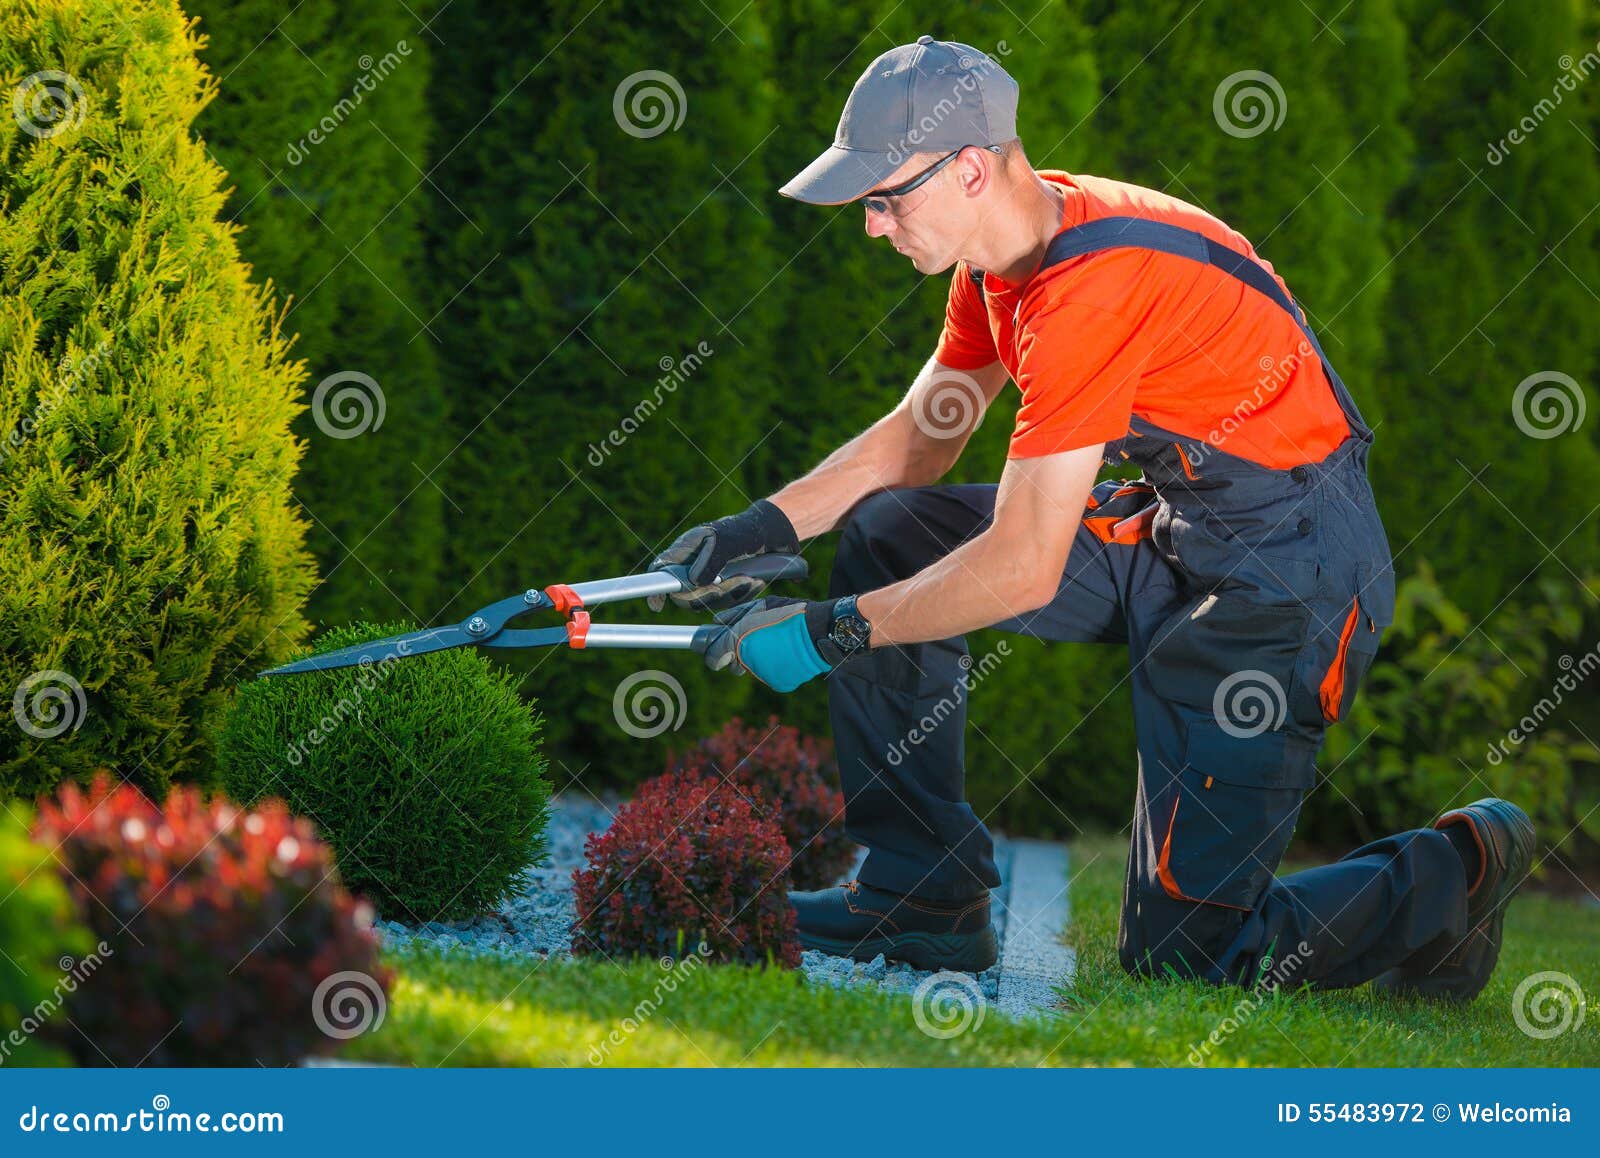 professional gardener at work